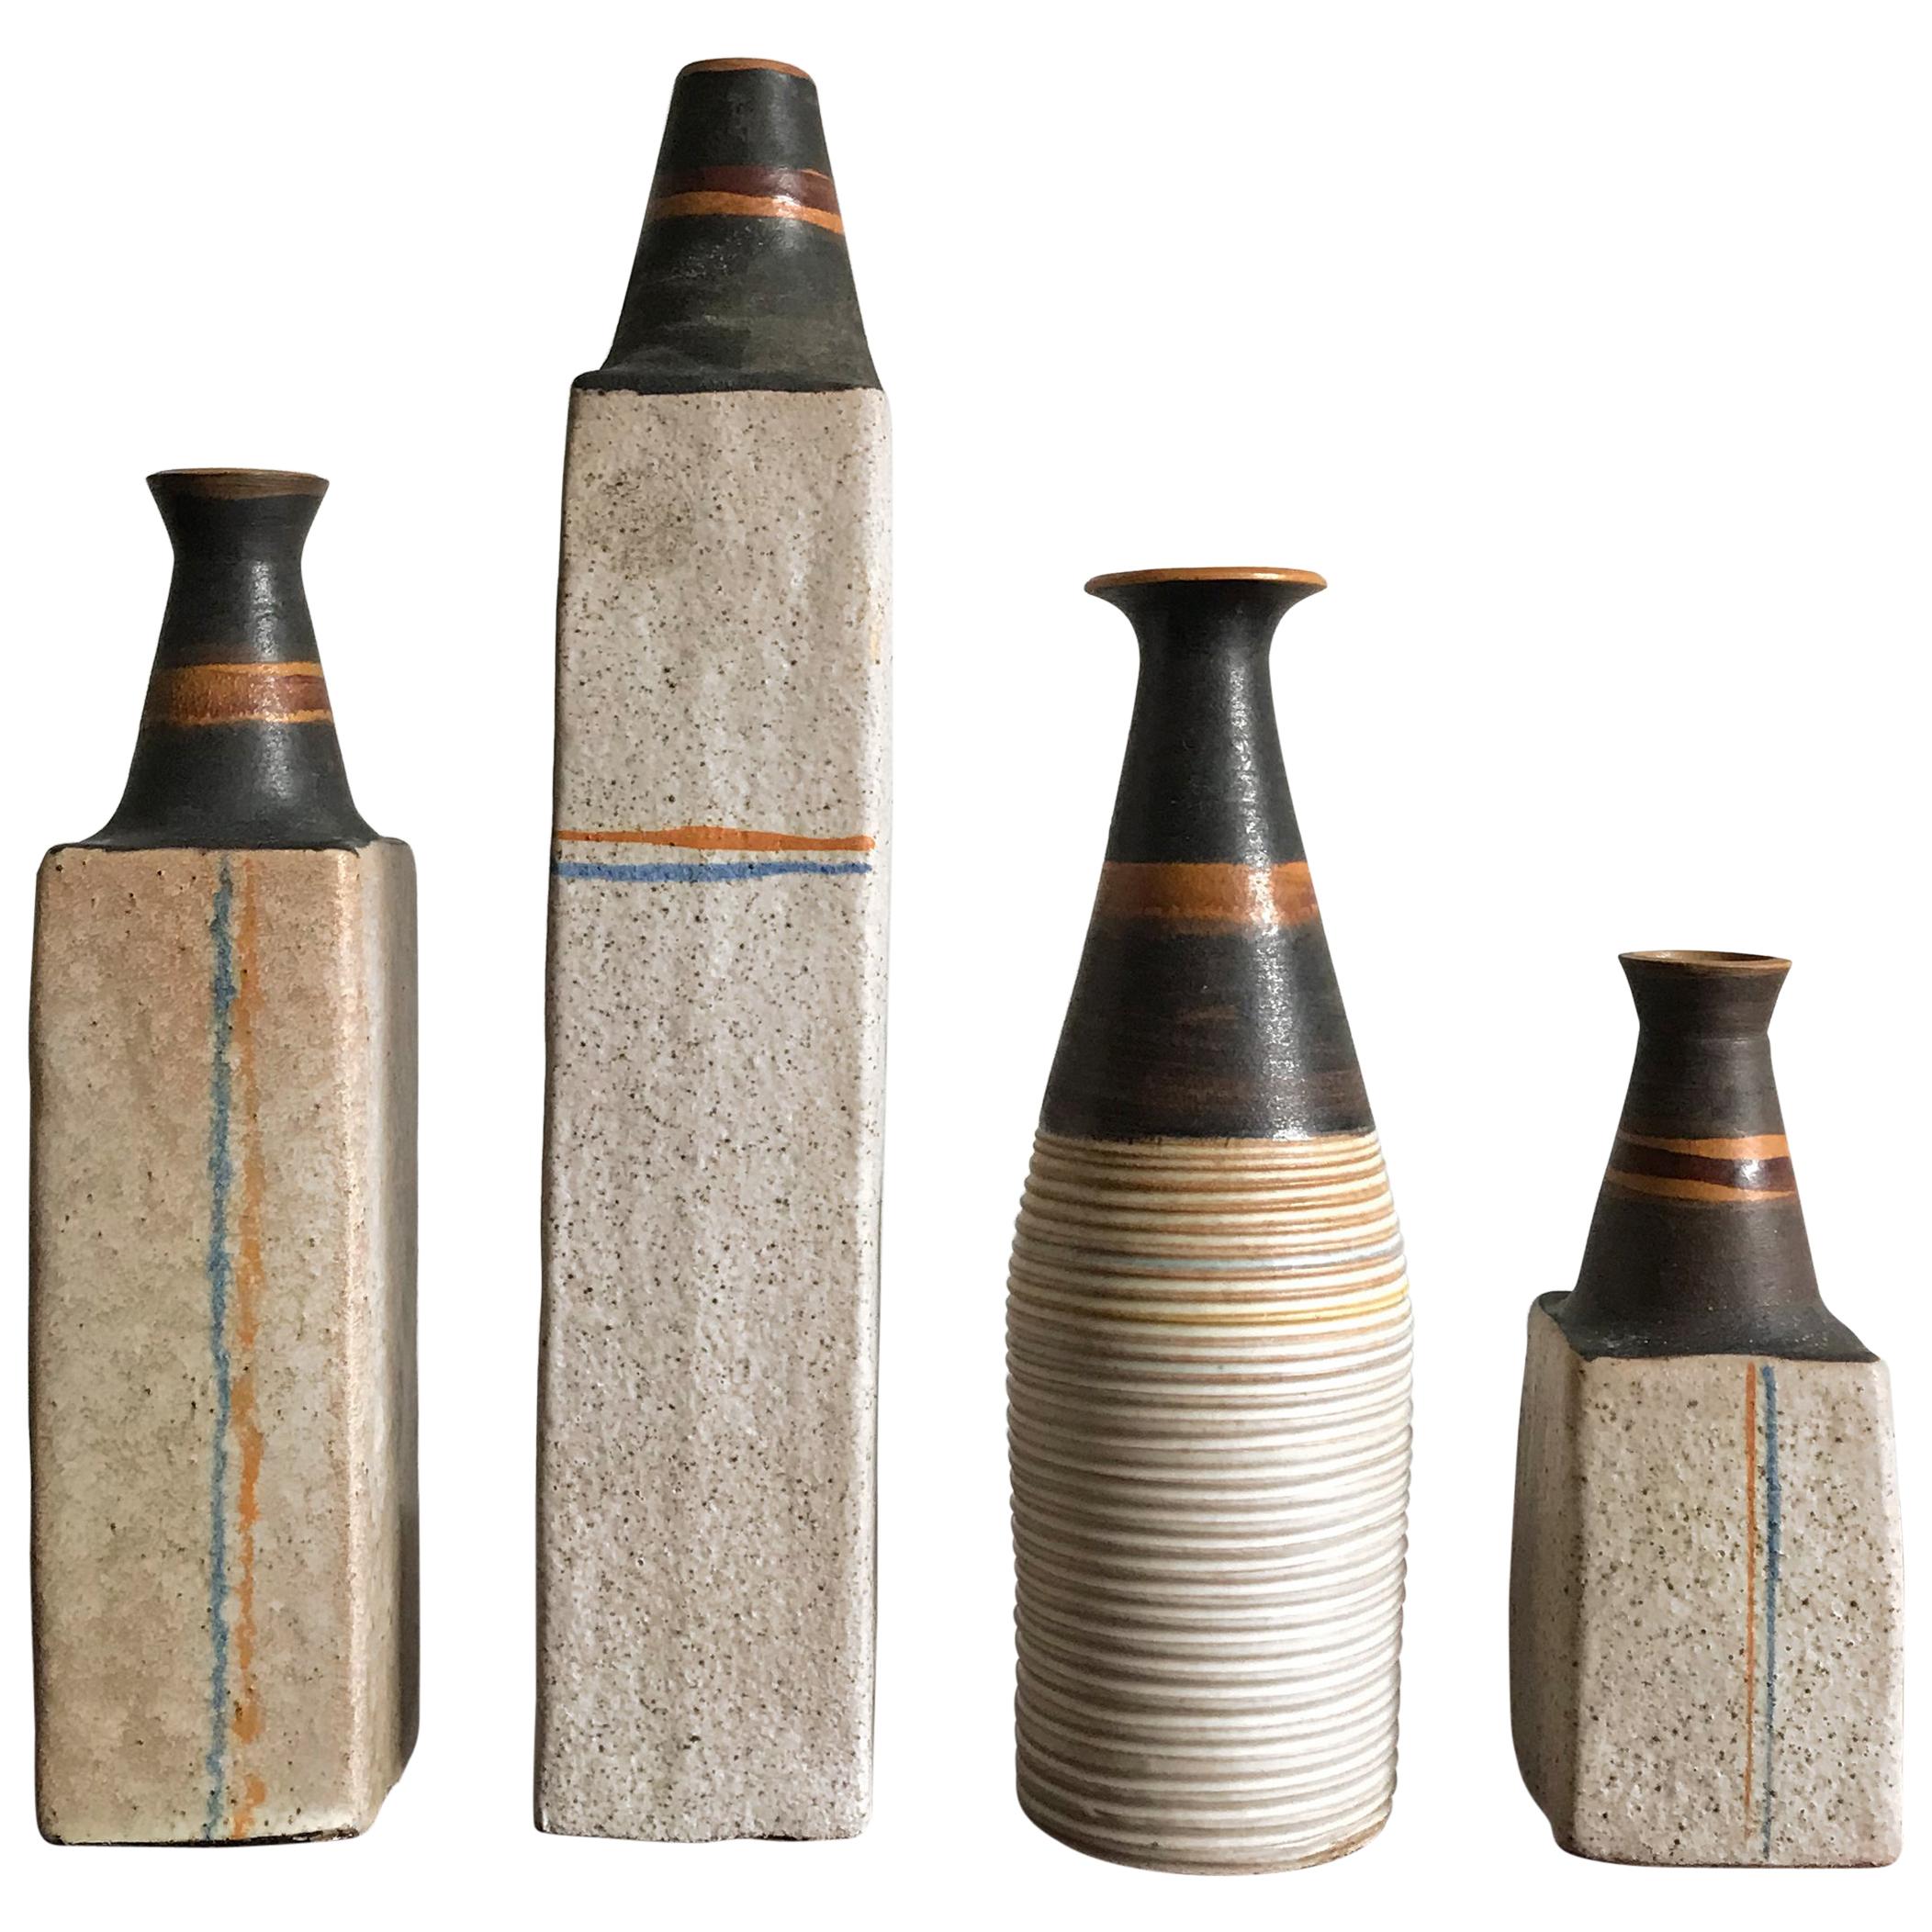 Ivo Sassi Mid-Century Modern Design Italian Ceramic Vases Bottles Set, 1950s